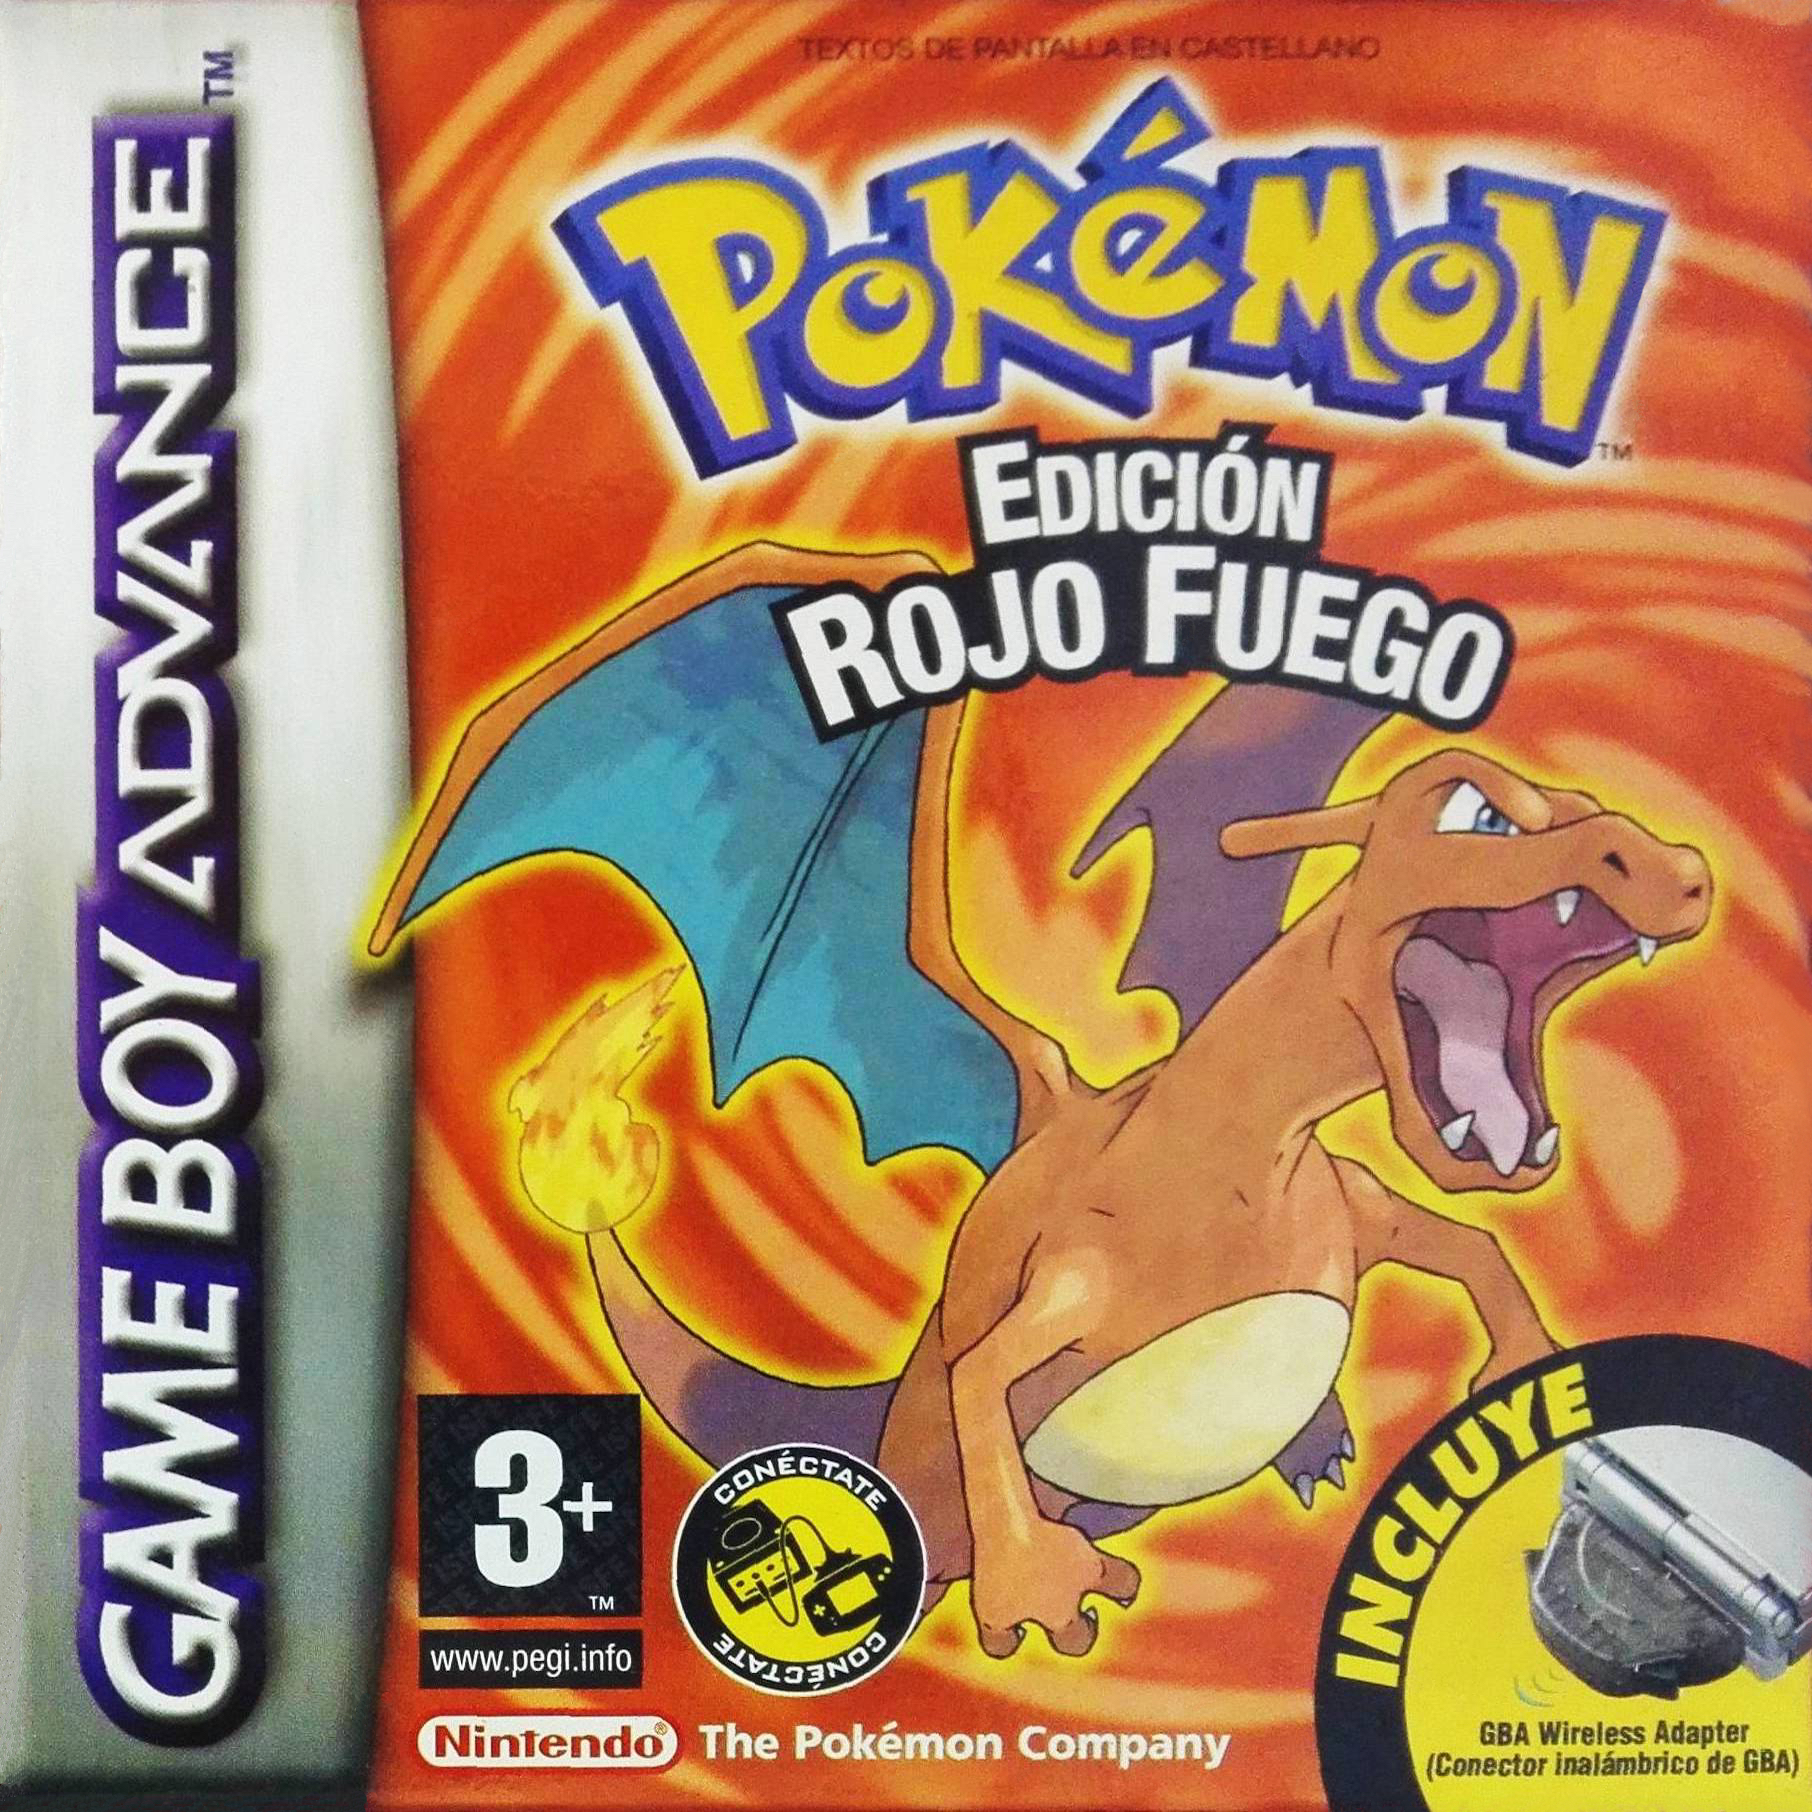 pokemon fire red version